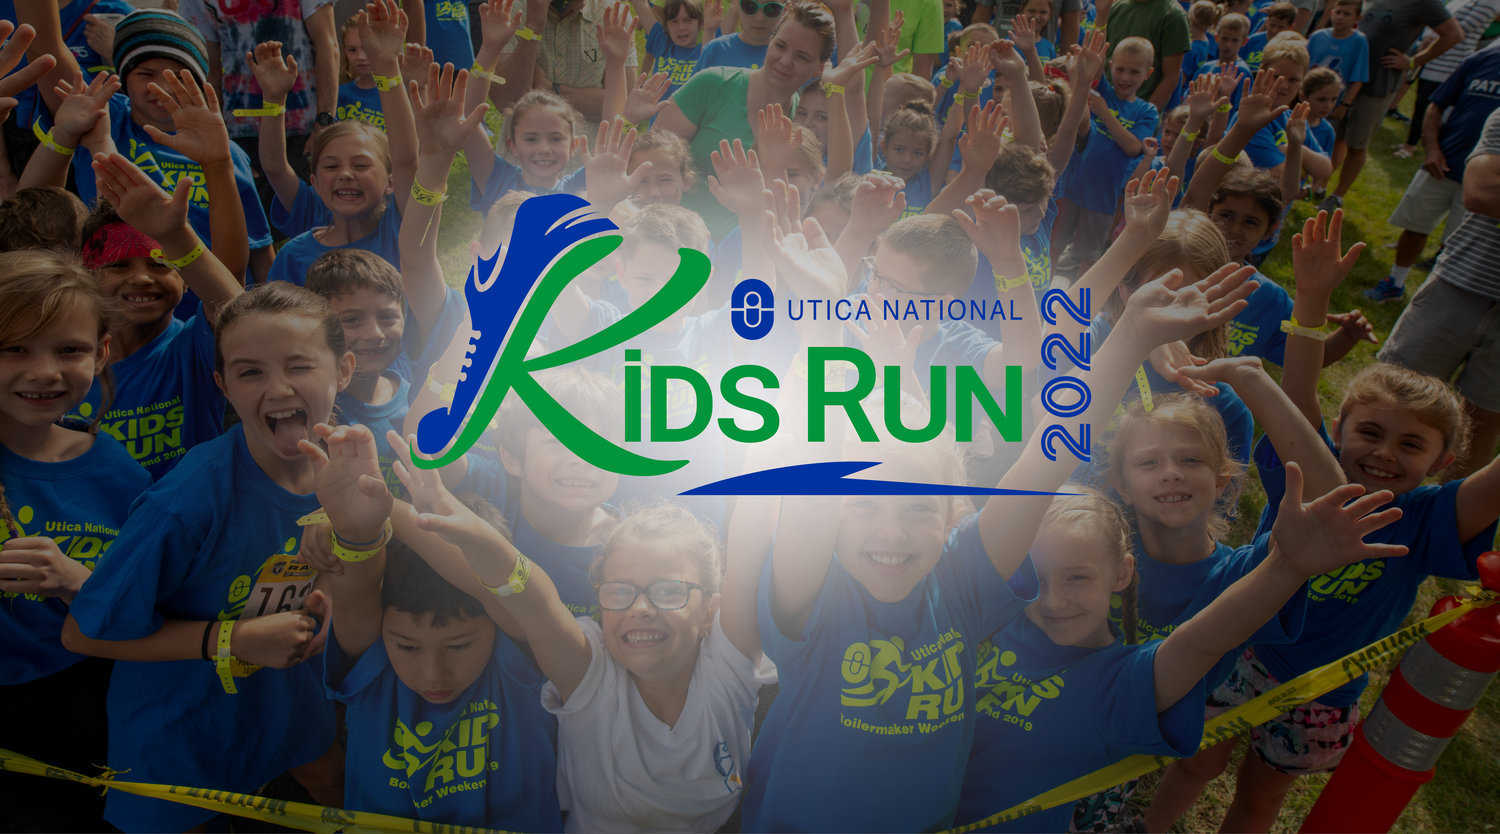 The Utica National Kids' Run 2022 logo.